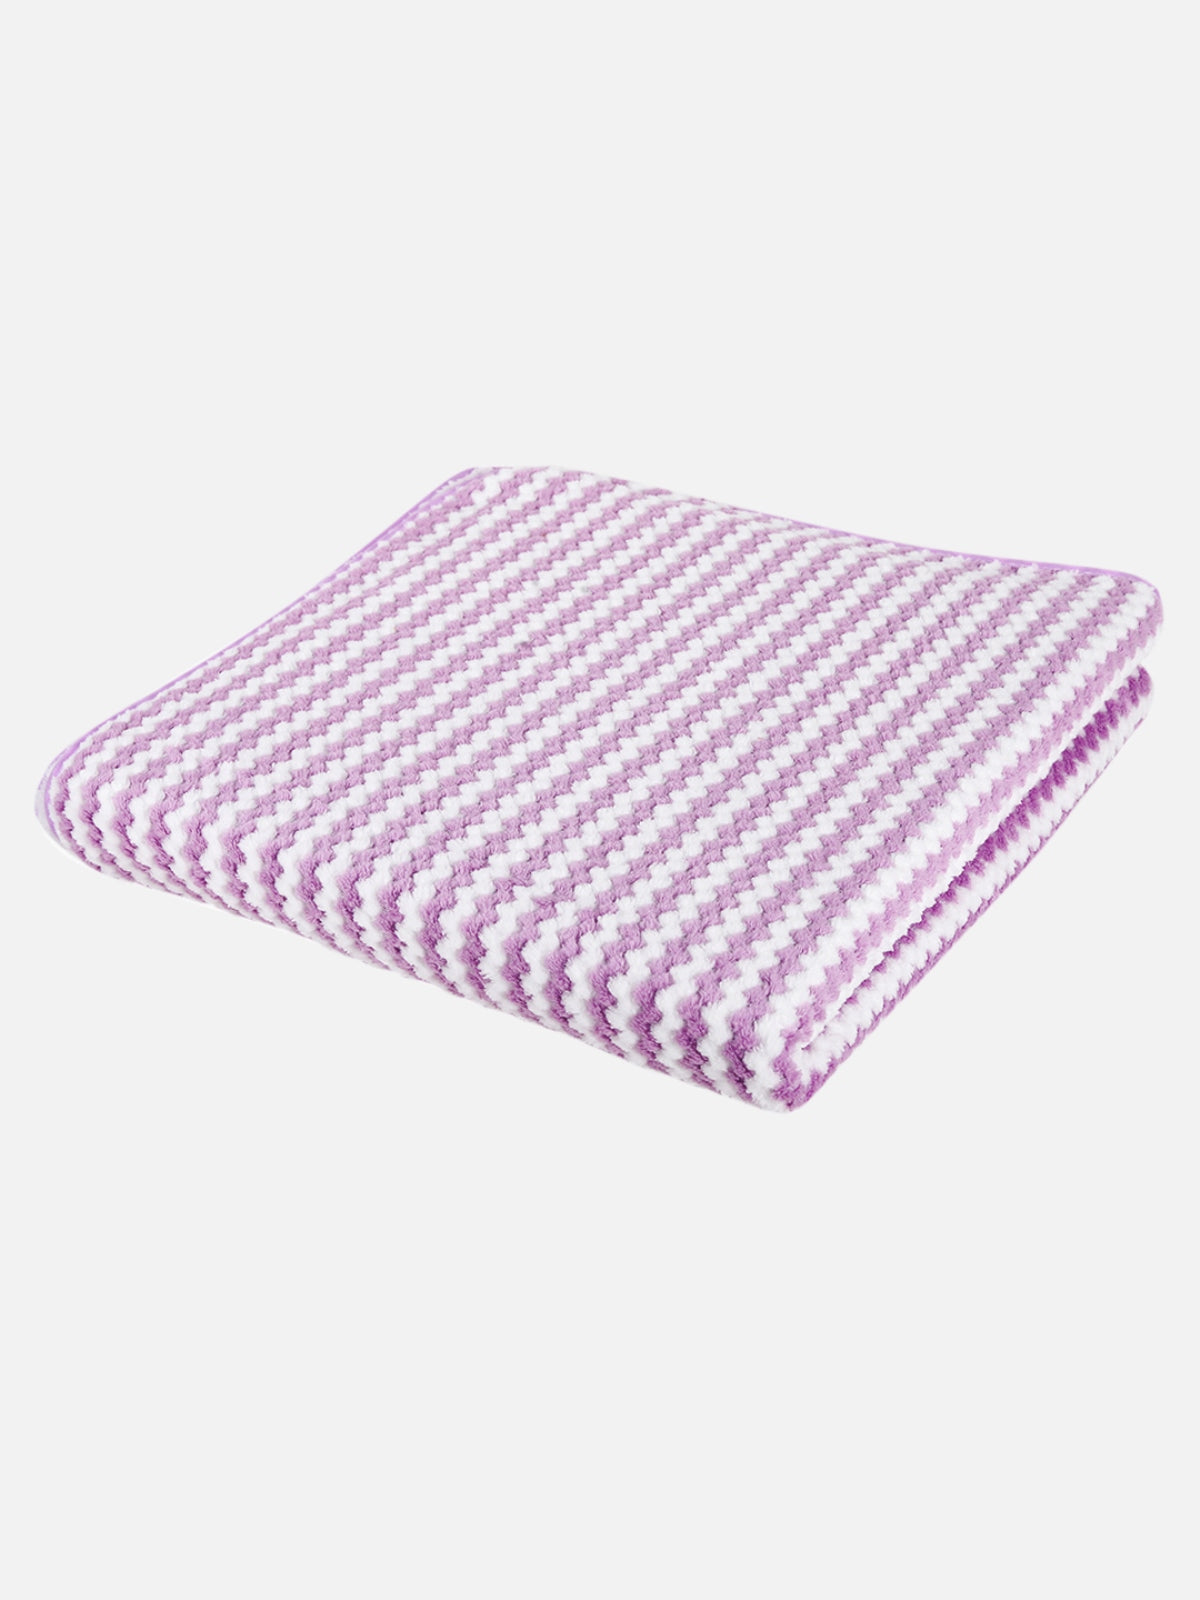 Set of 3 Lavender & White Solid Microfiber Towels